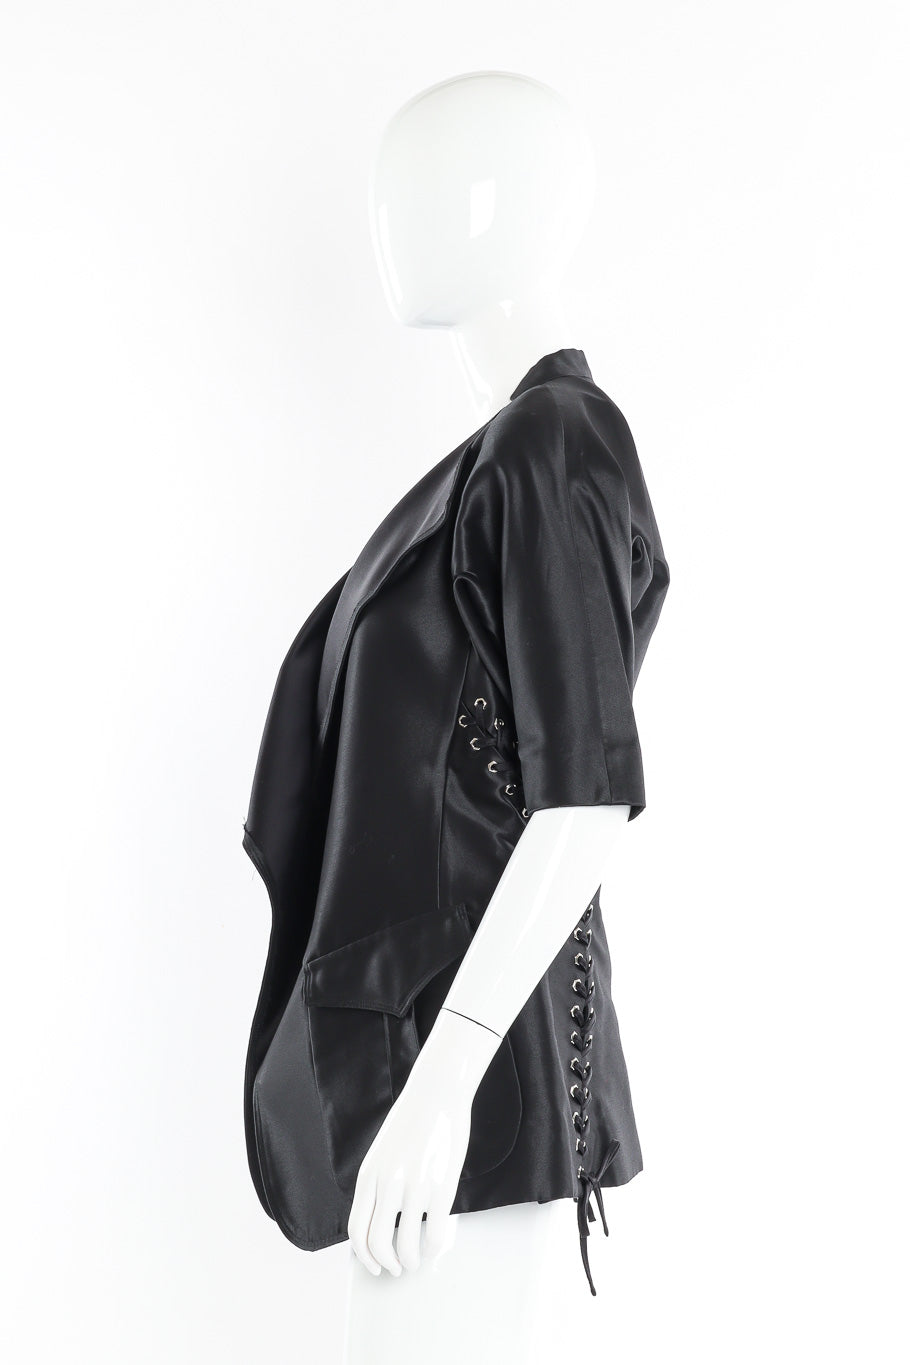 Grommet jacket by Yves Saint Laurent mannequin side @recessla